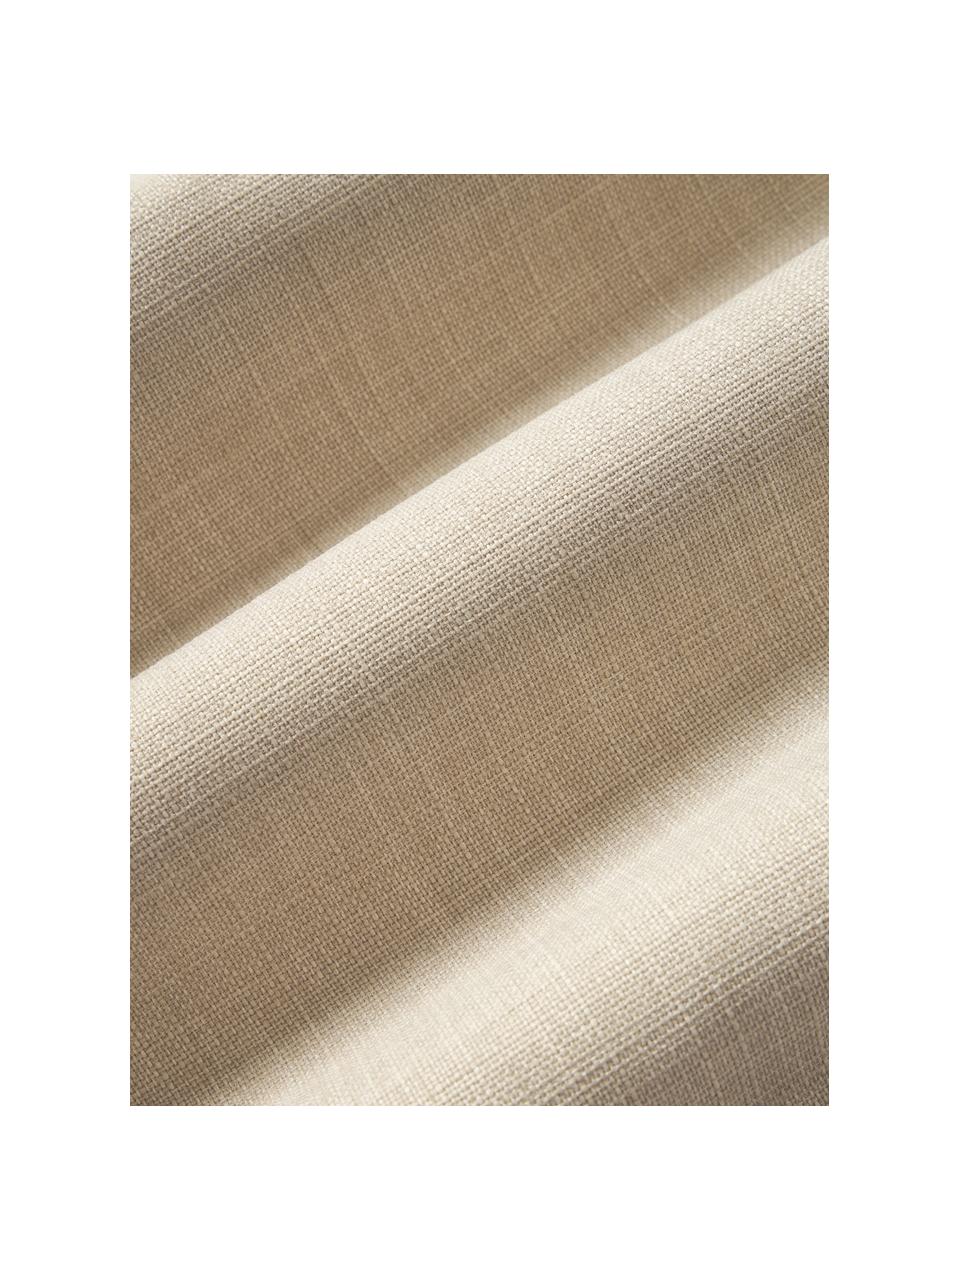 Kissenhülle Cressida mit zweifarbiger Kederumrandung, 100 % Polyester, Beige, B 45 x L 45 cm